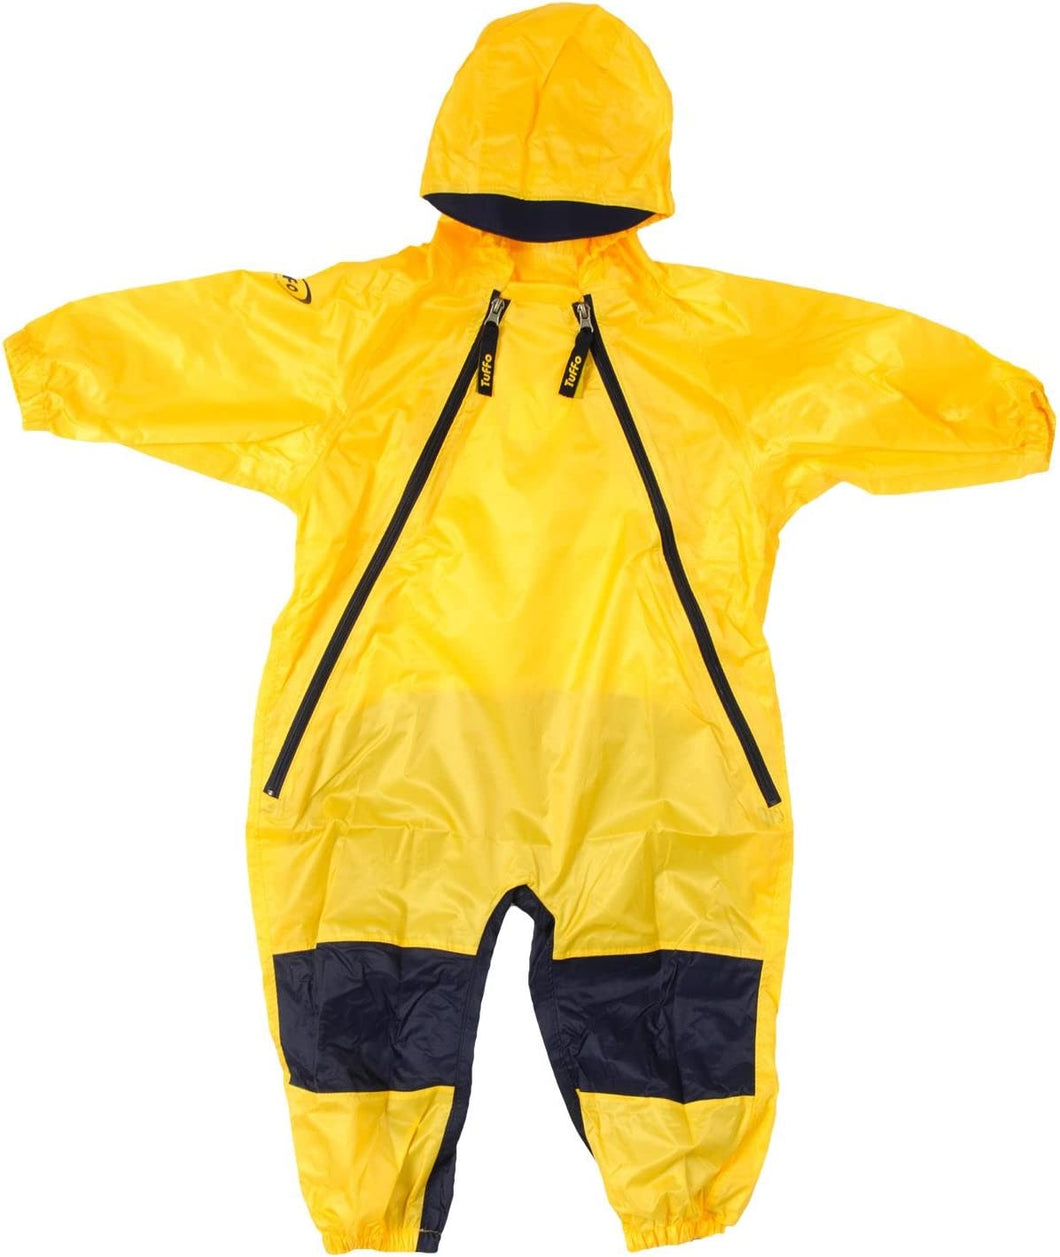 Tuffo Muddy Buddy one piece waterproof rain suit - Yellow